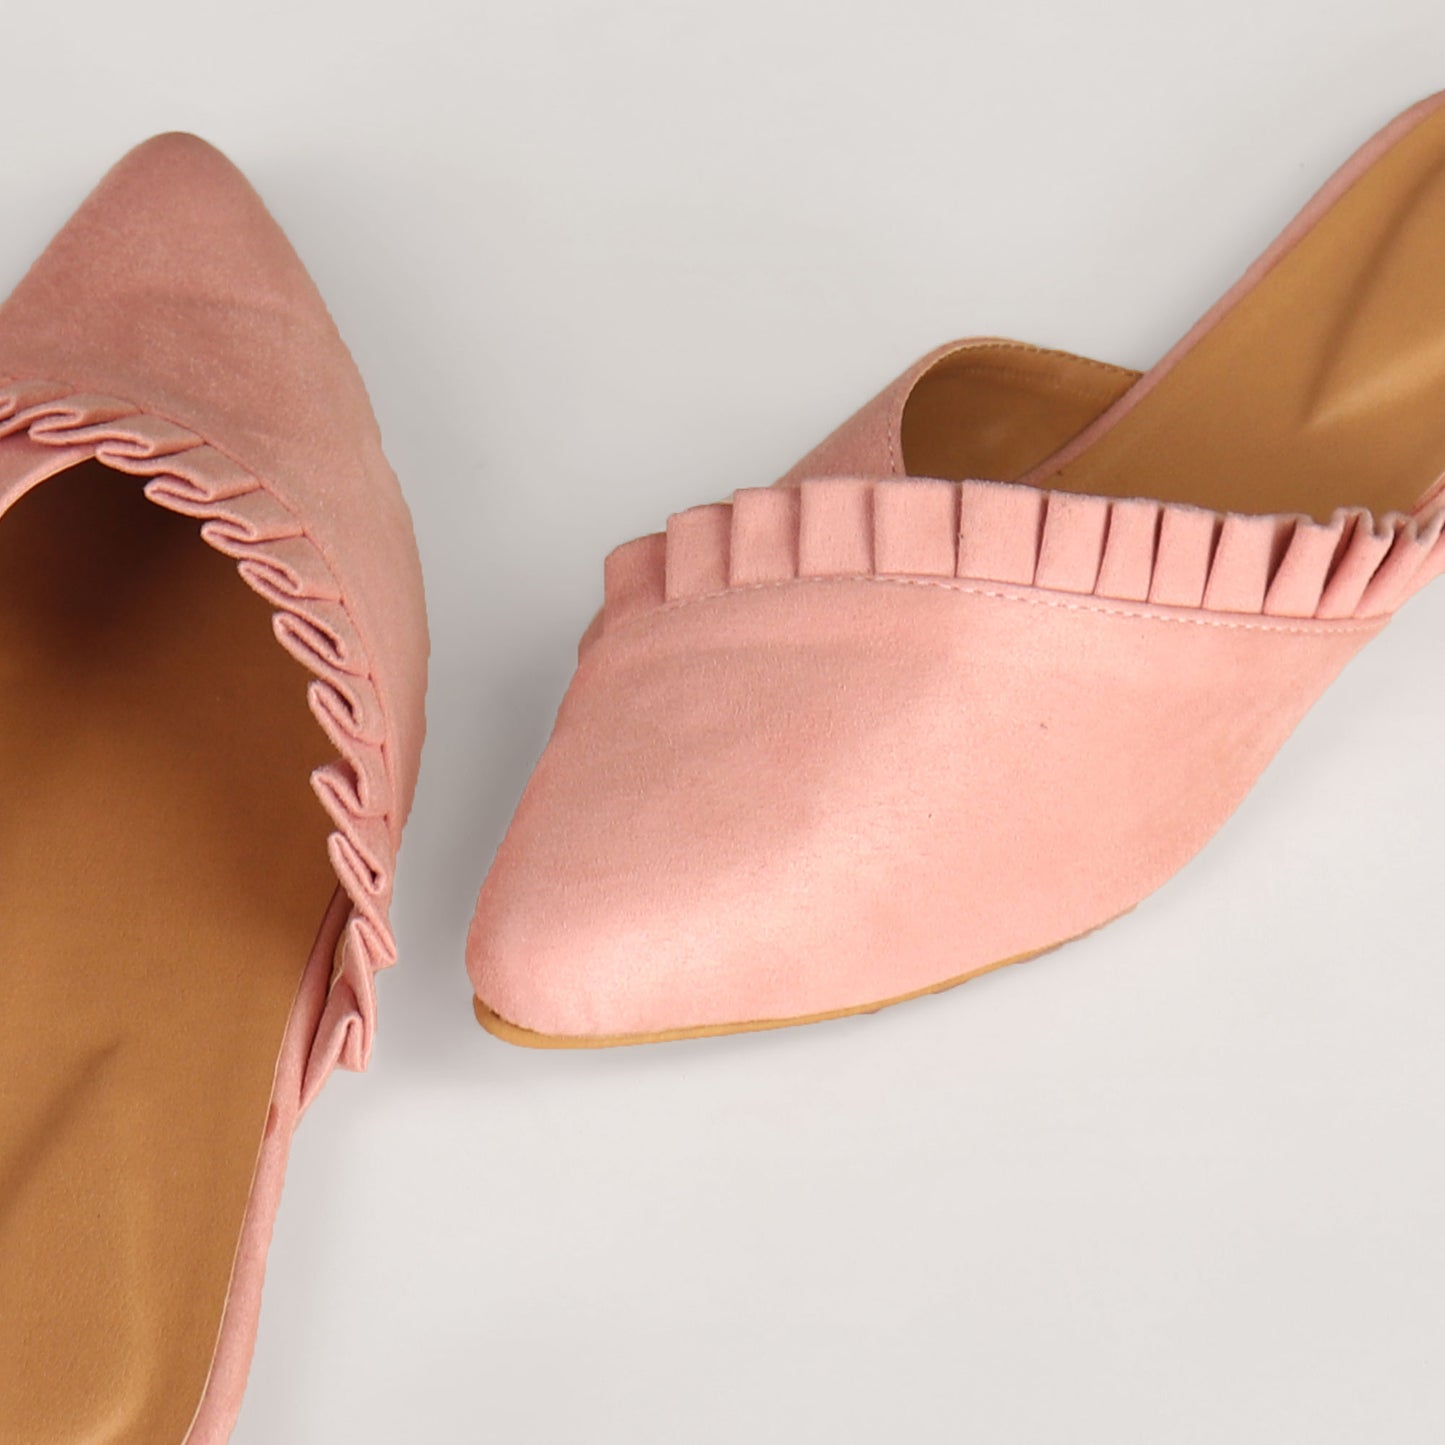 Foot Wear,The Suede Foliate Mule in Baby Pink - Cippele Multi Store